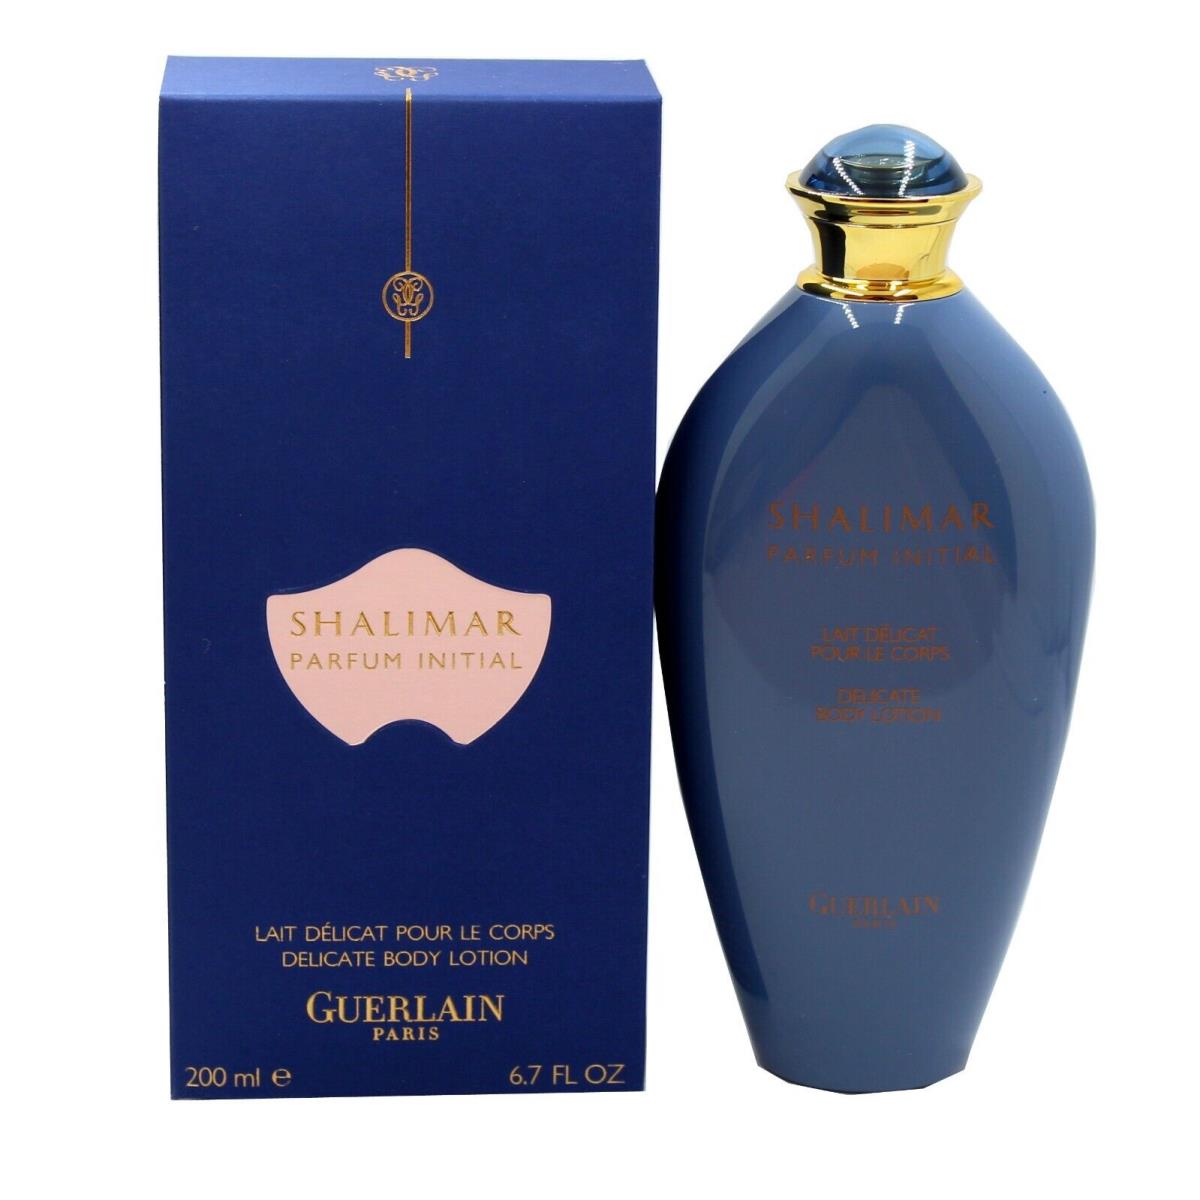 Guerlain Shalimar Parfum Initial Delicate Body Lotion 200 ML/6.7 Fl.oz